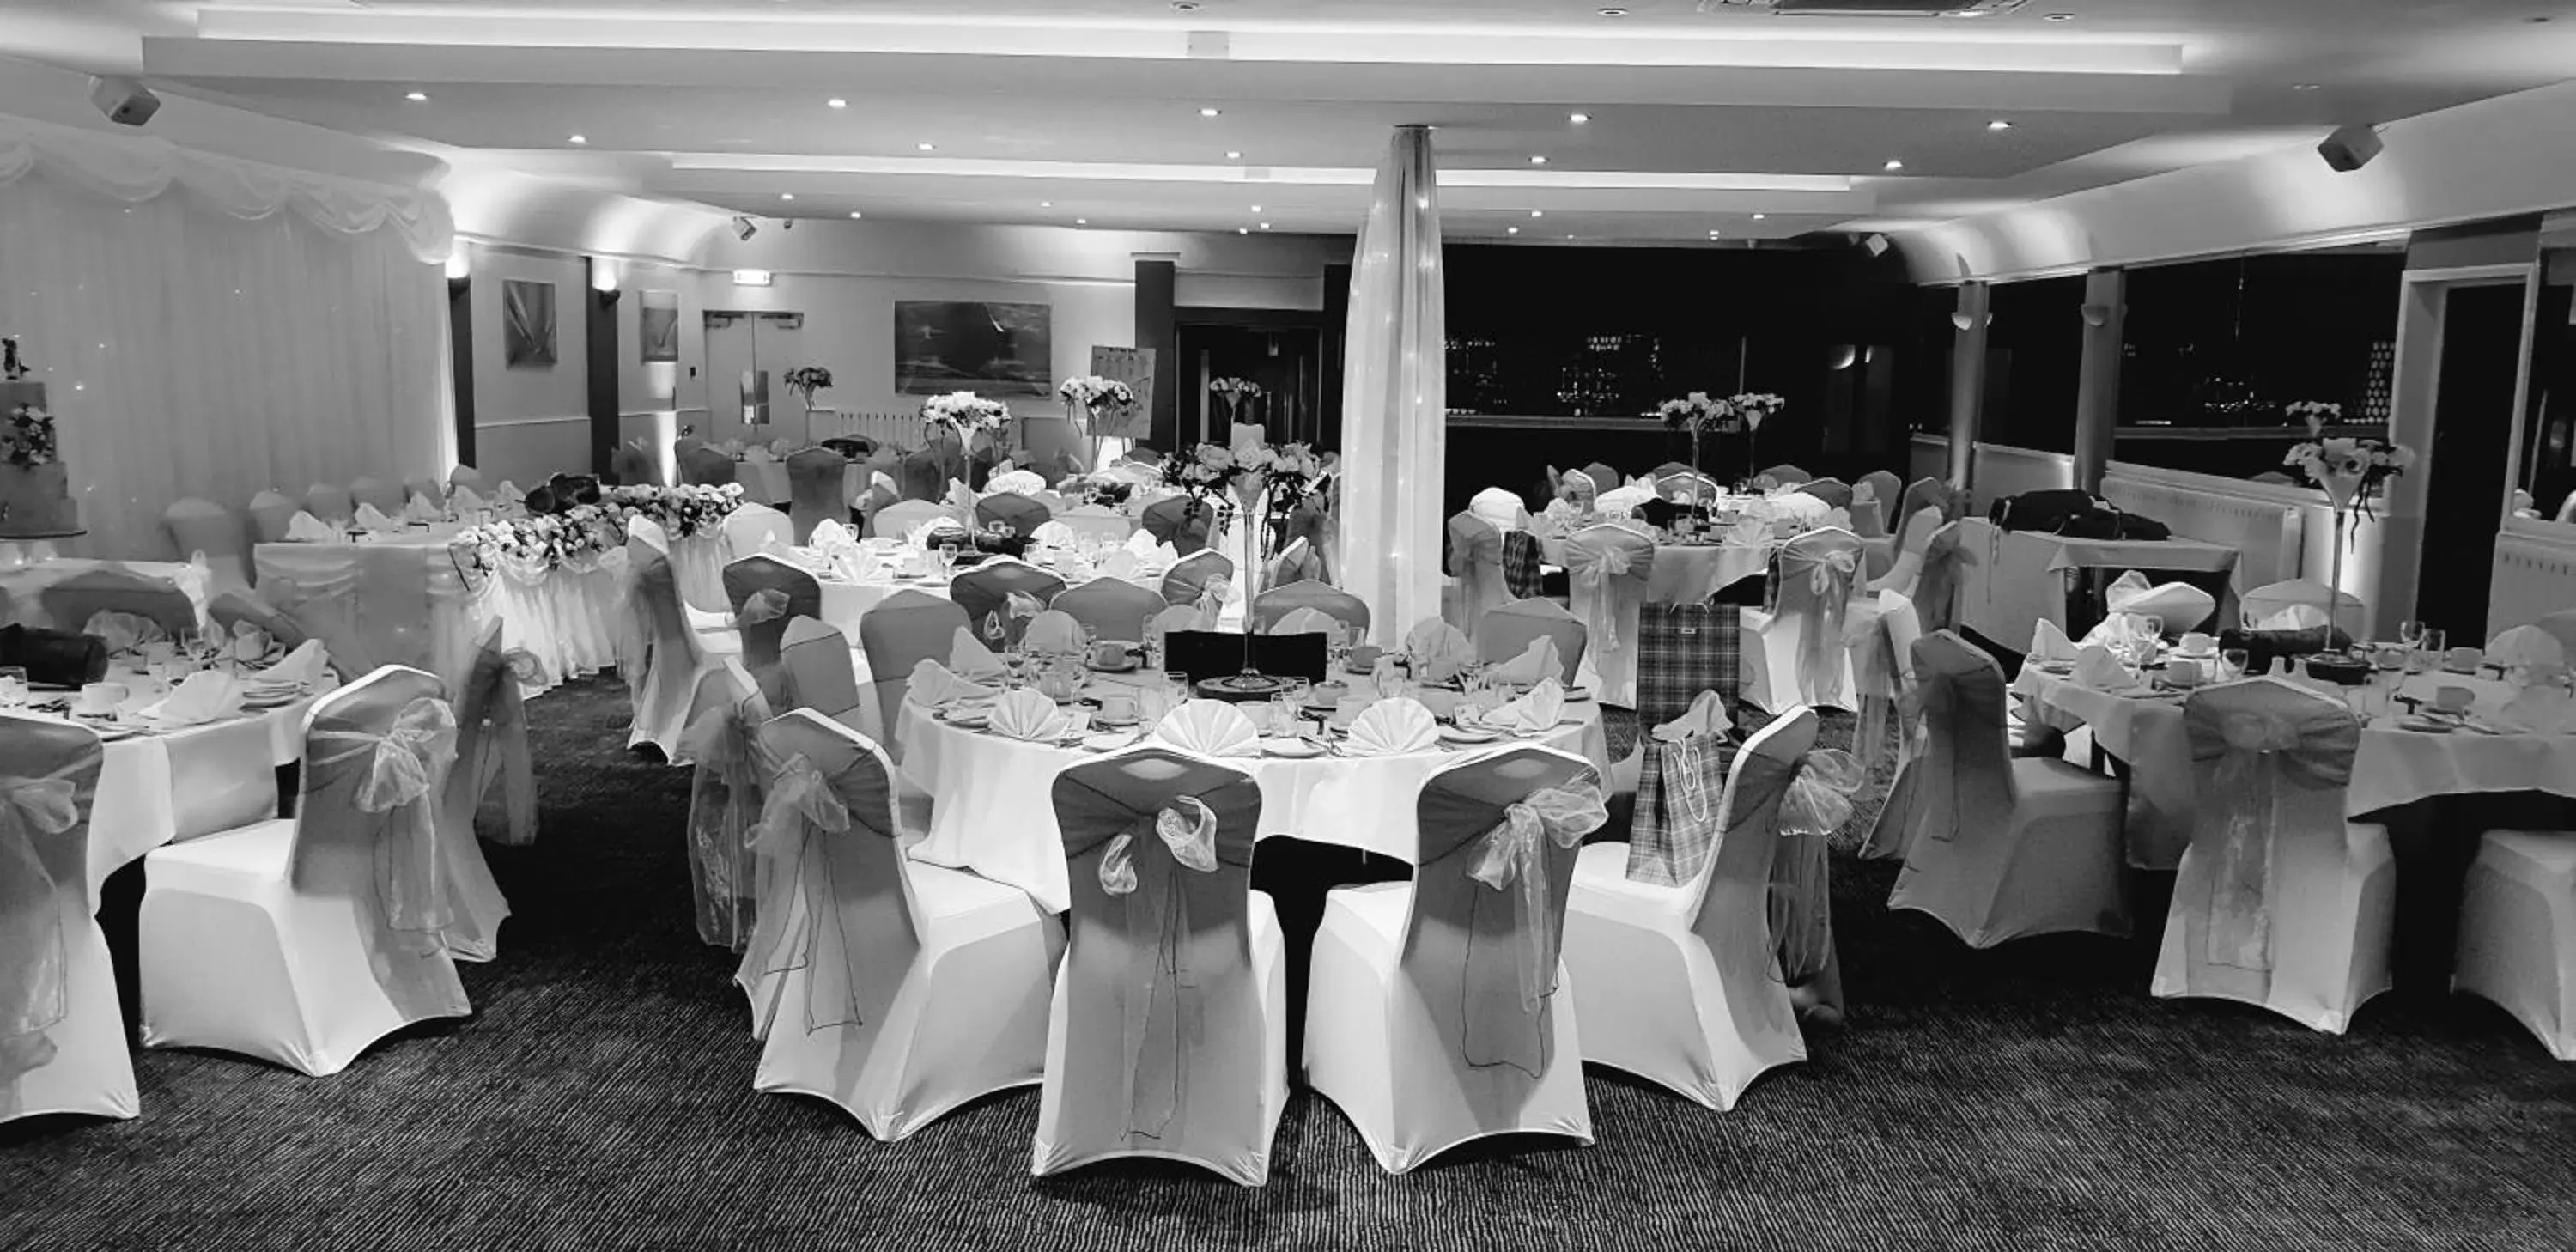 Banquet/Function facilities, Banquet Facilities in The Empress Hotel